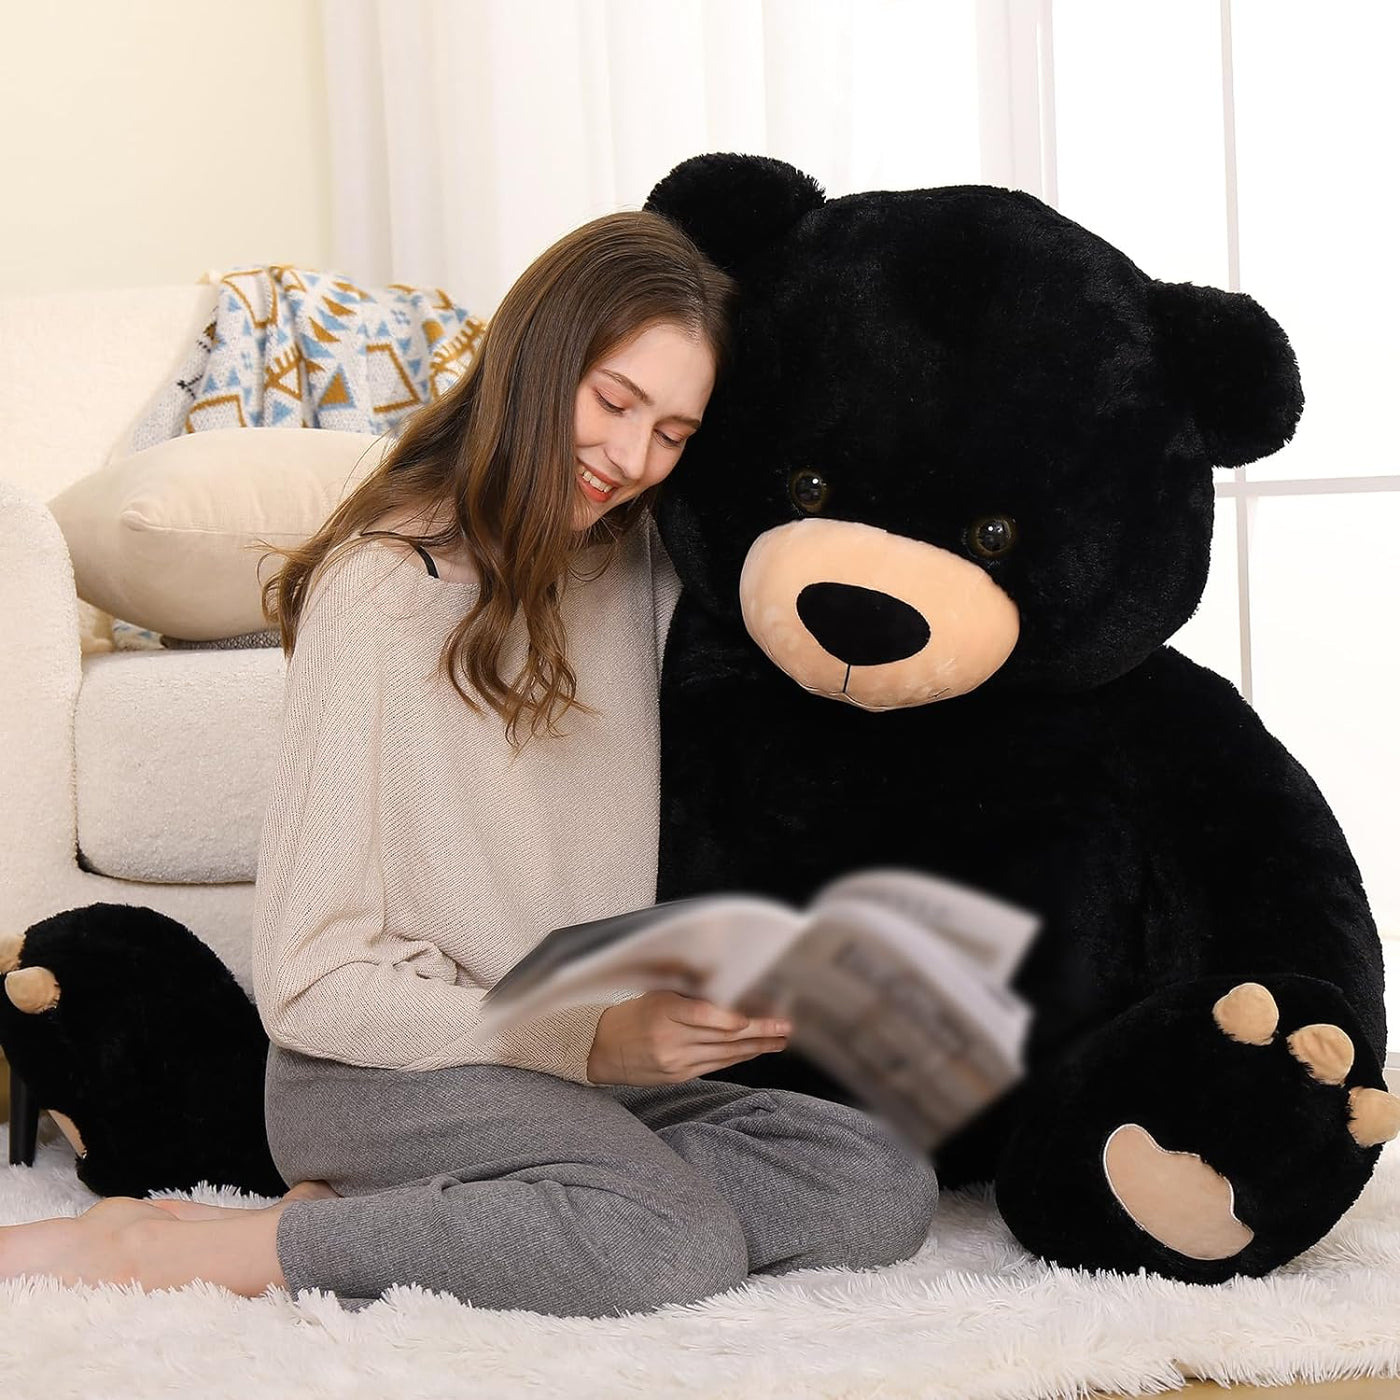 Large Teddy Bear Plush Toy, Black, 59 Inches - MorisMos Stuffed Animal Toys